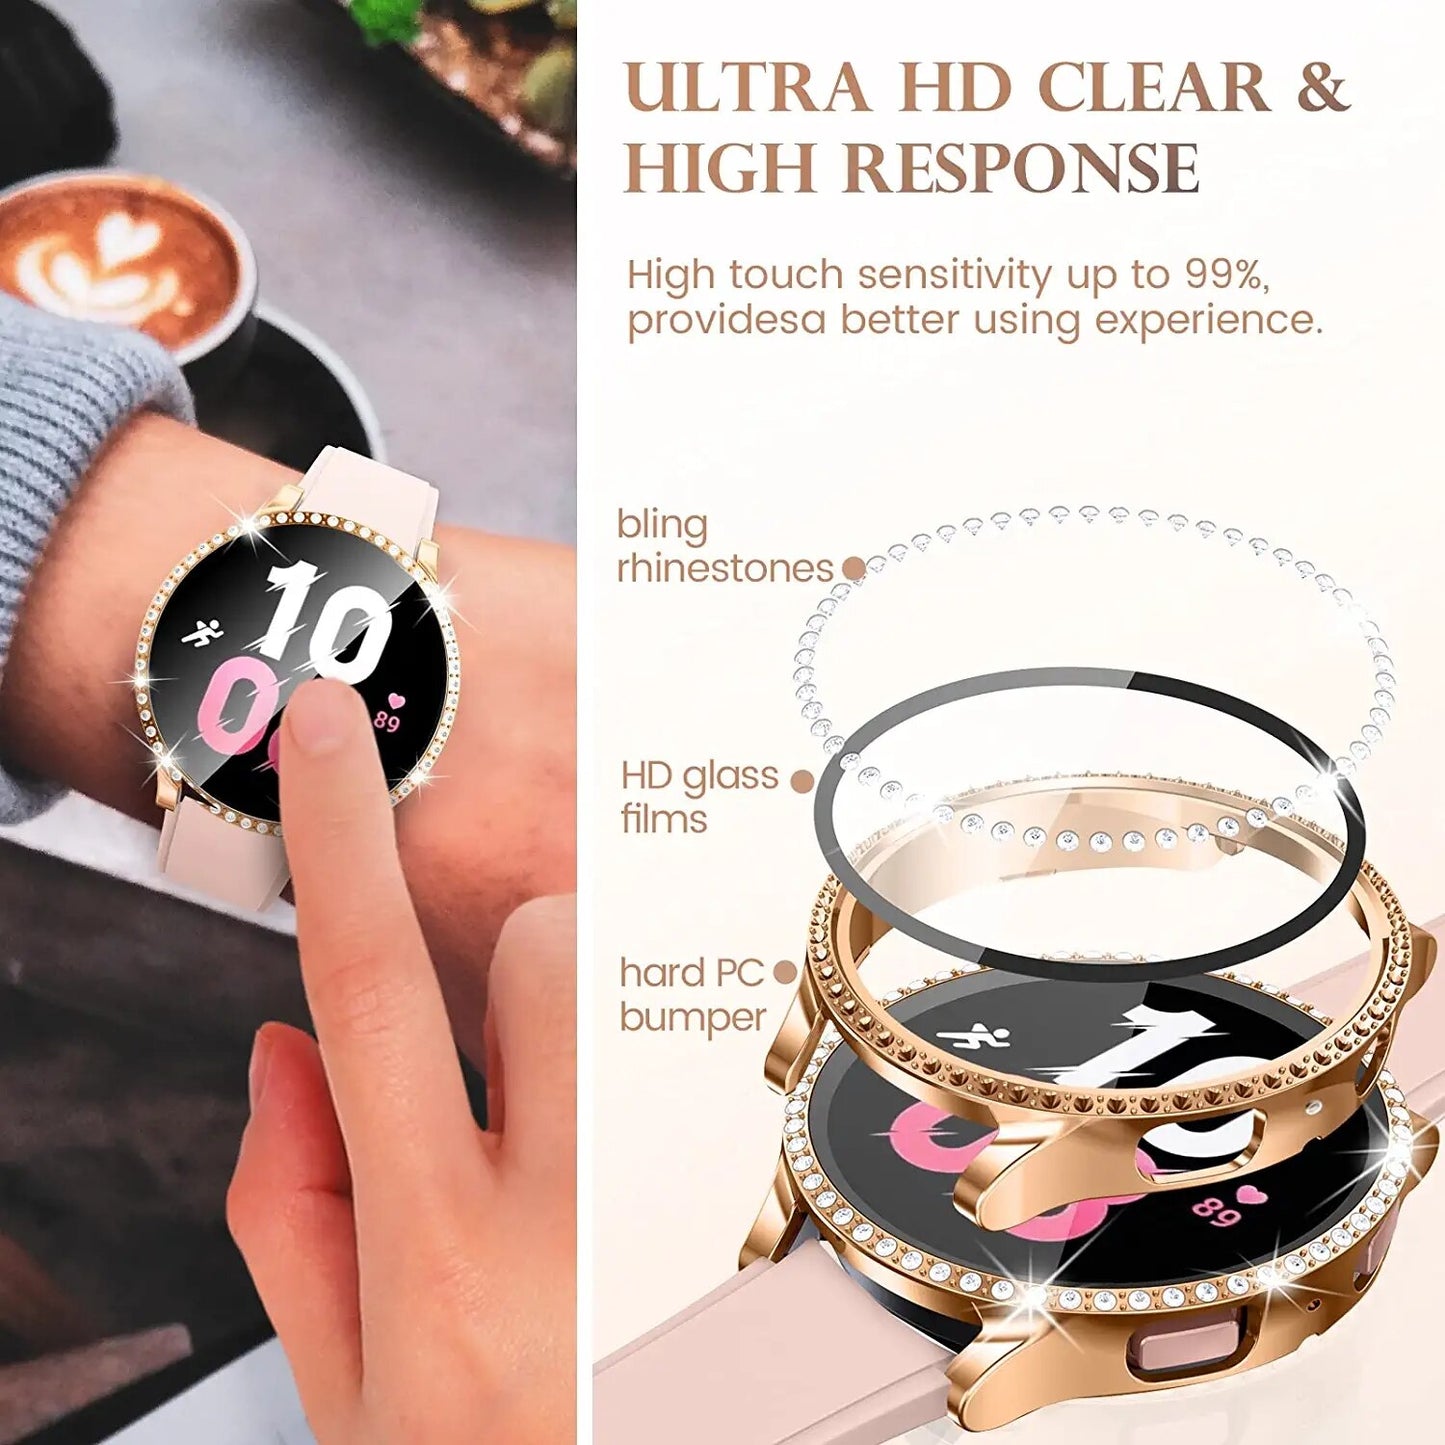 Diamond Case+Glass for Samsung Galaxy Watch